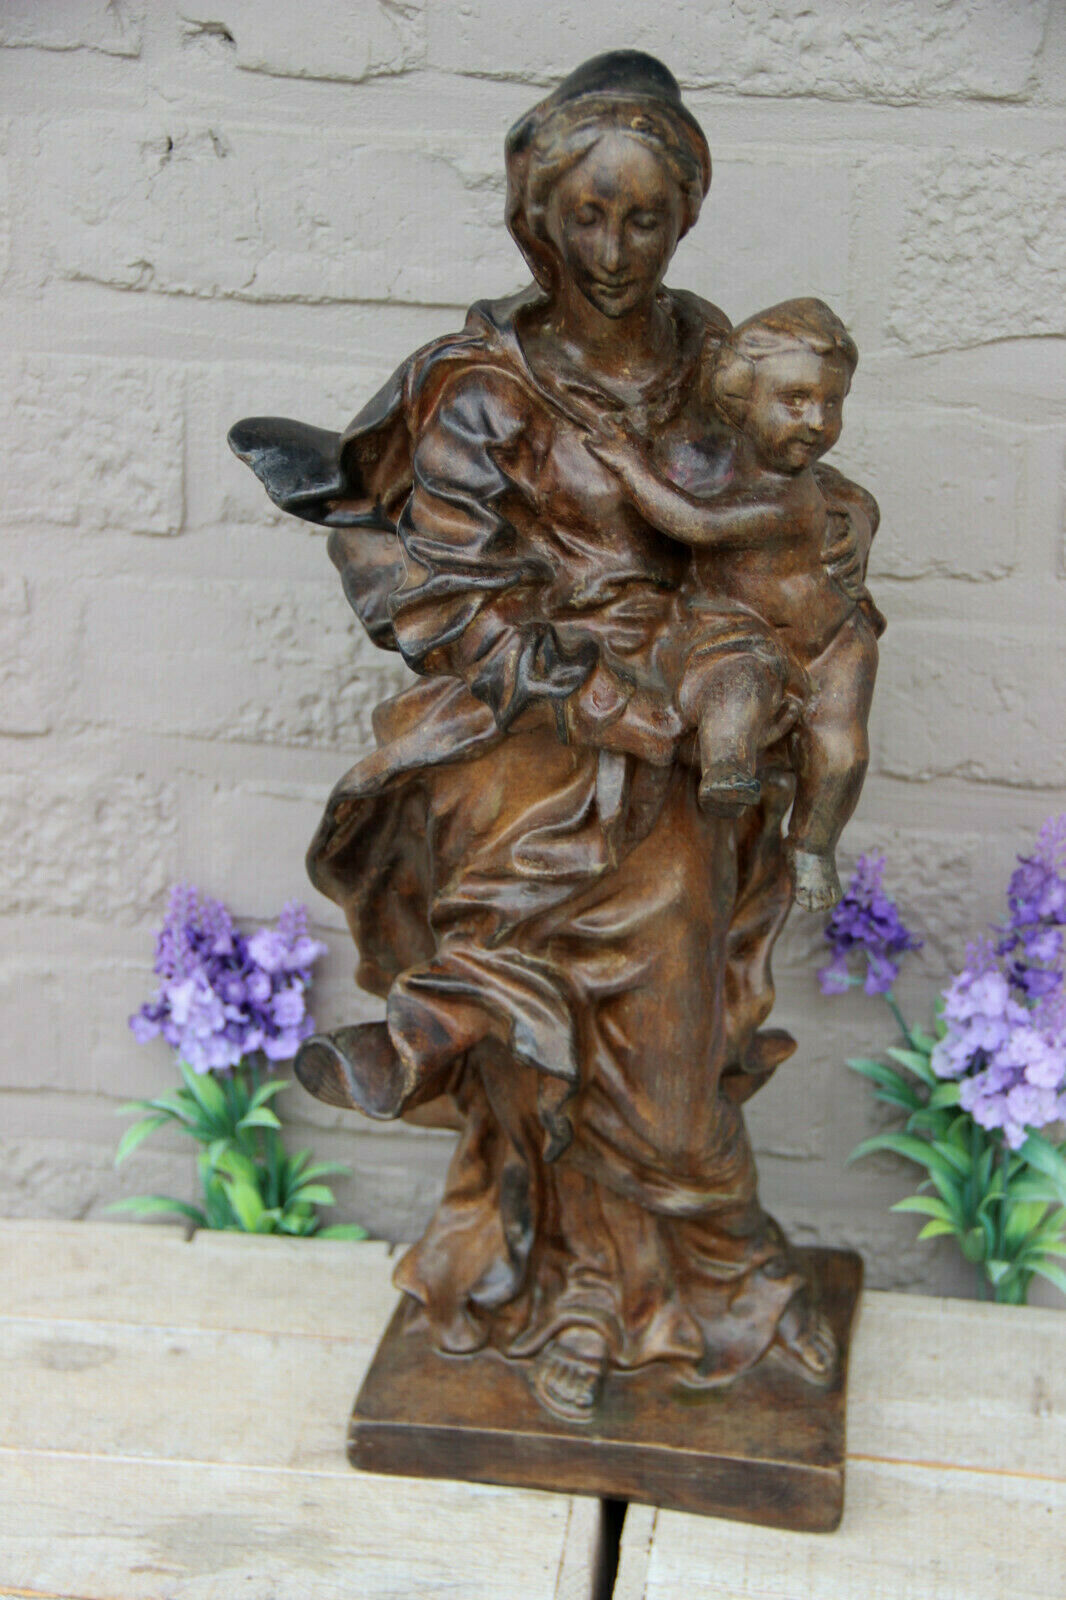 Antique French chalkware Madonna jesus statue figurine religious